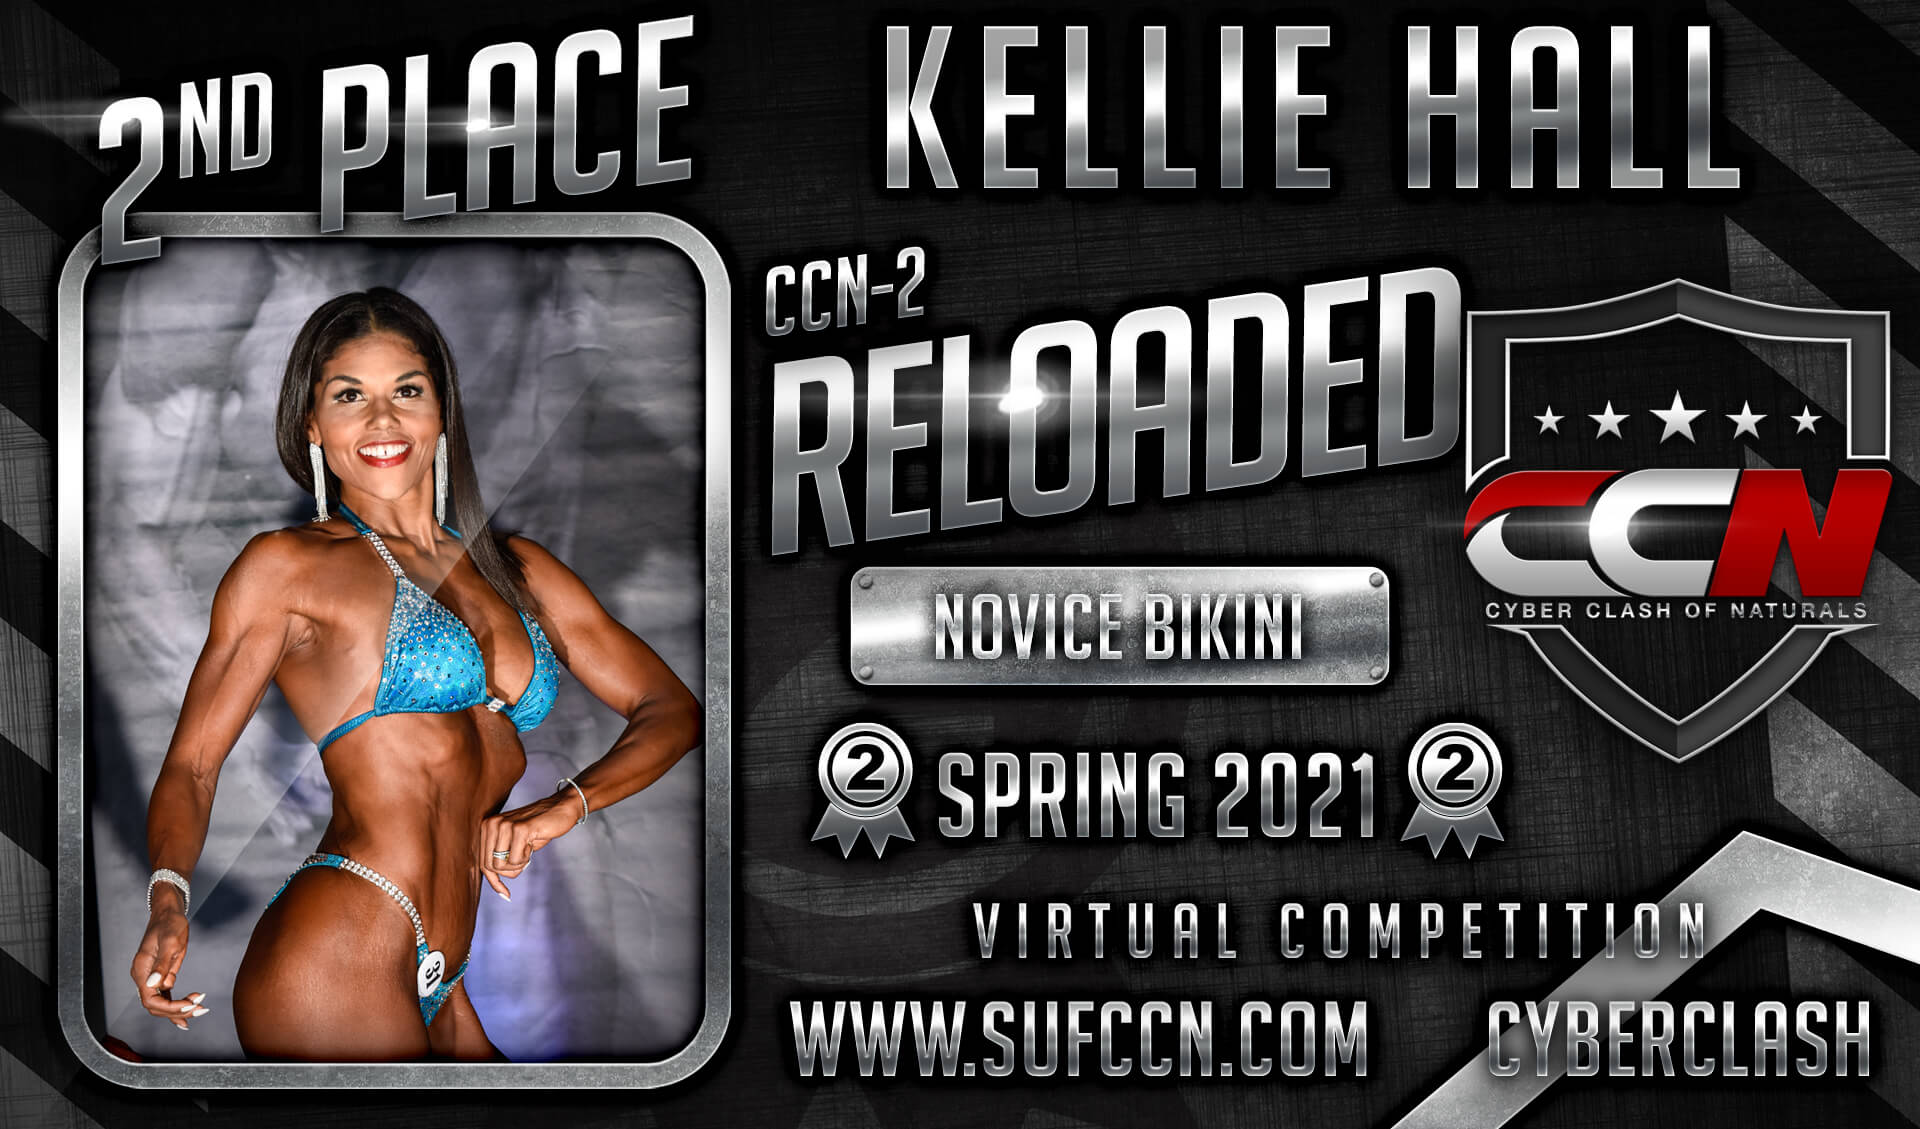 Kellie-H-2nd-place-banner-NOVICE-Bikini